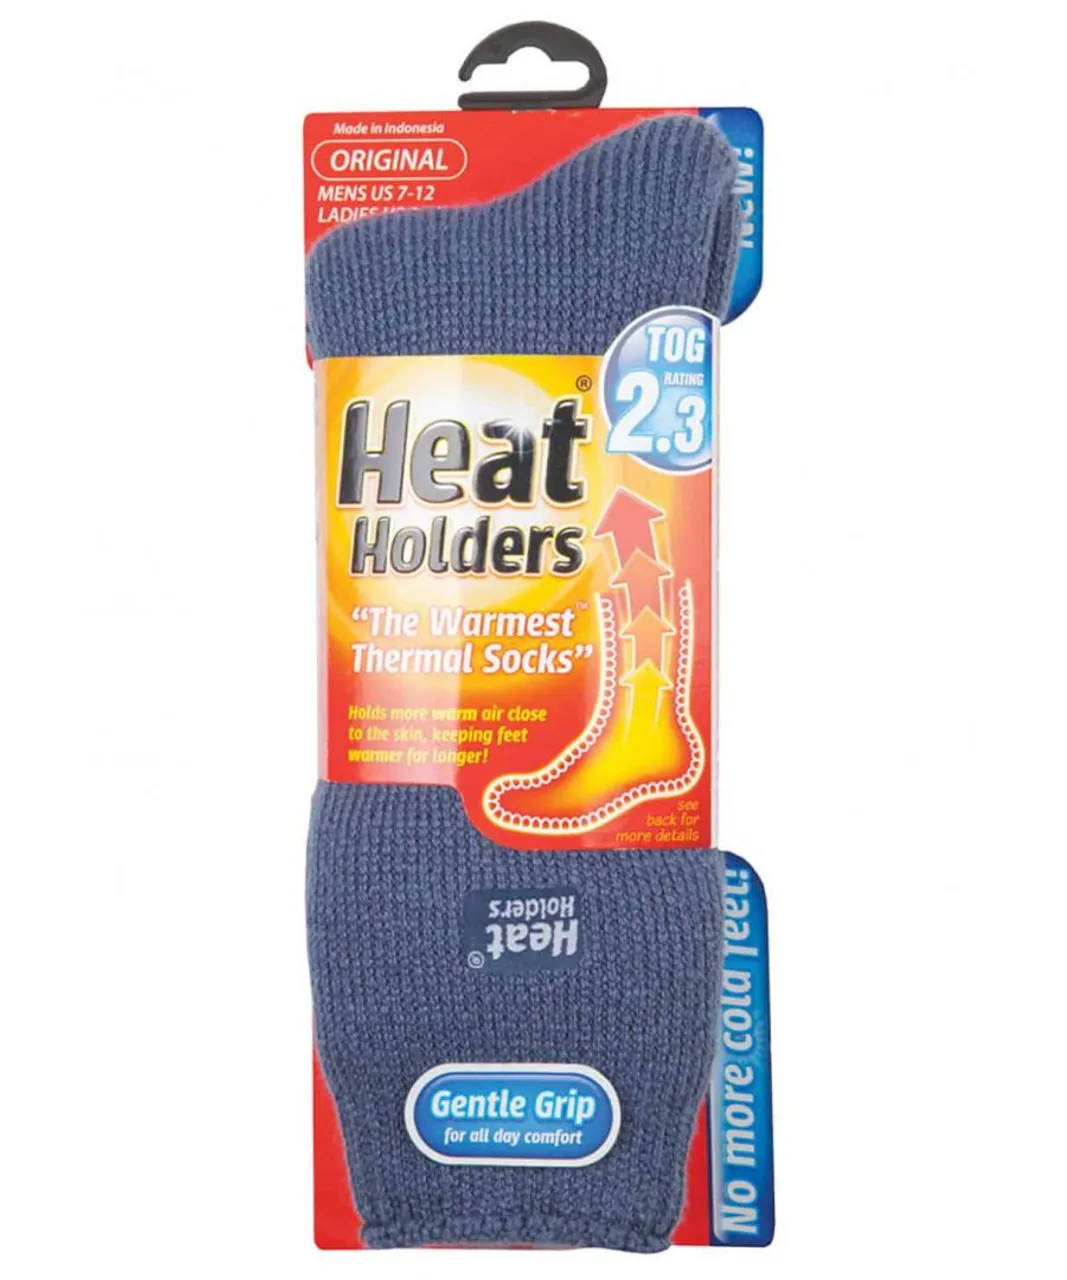 Heat Holders - Mens Original Thermal Socks - Blue Nylon